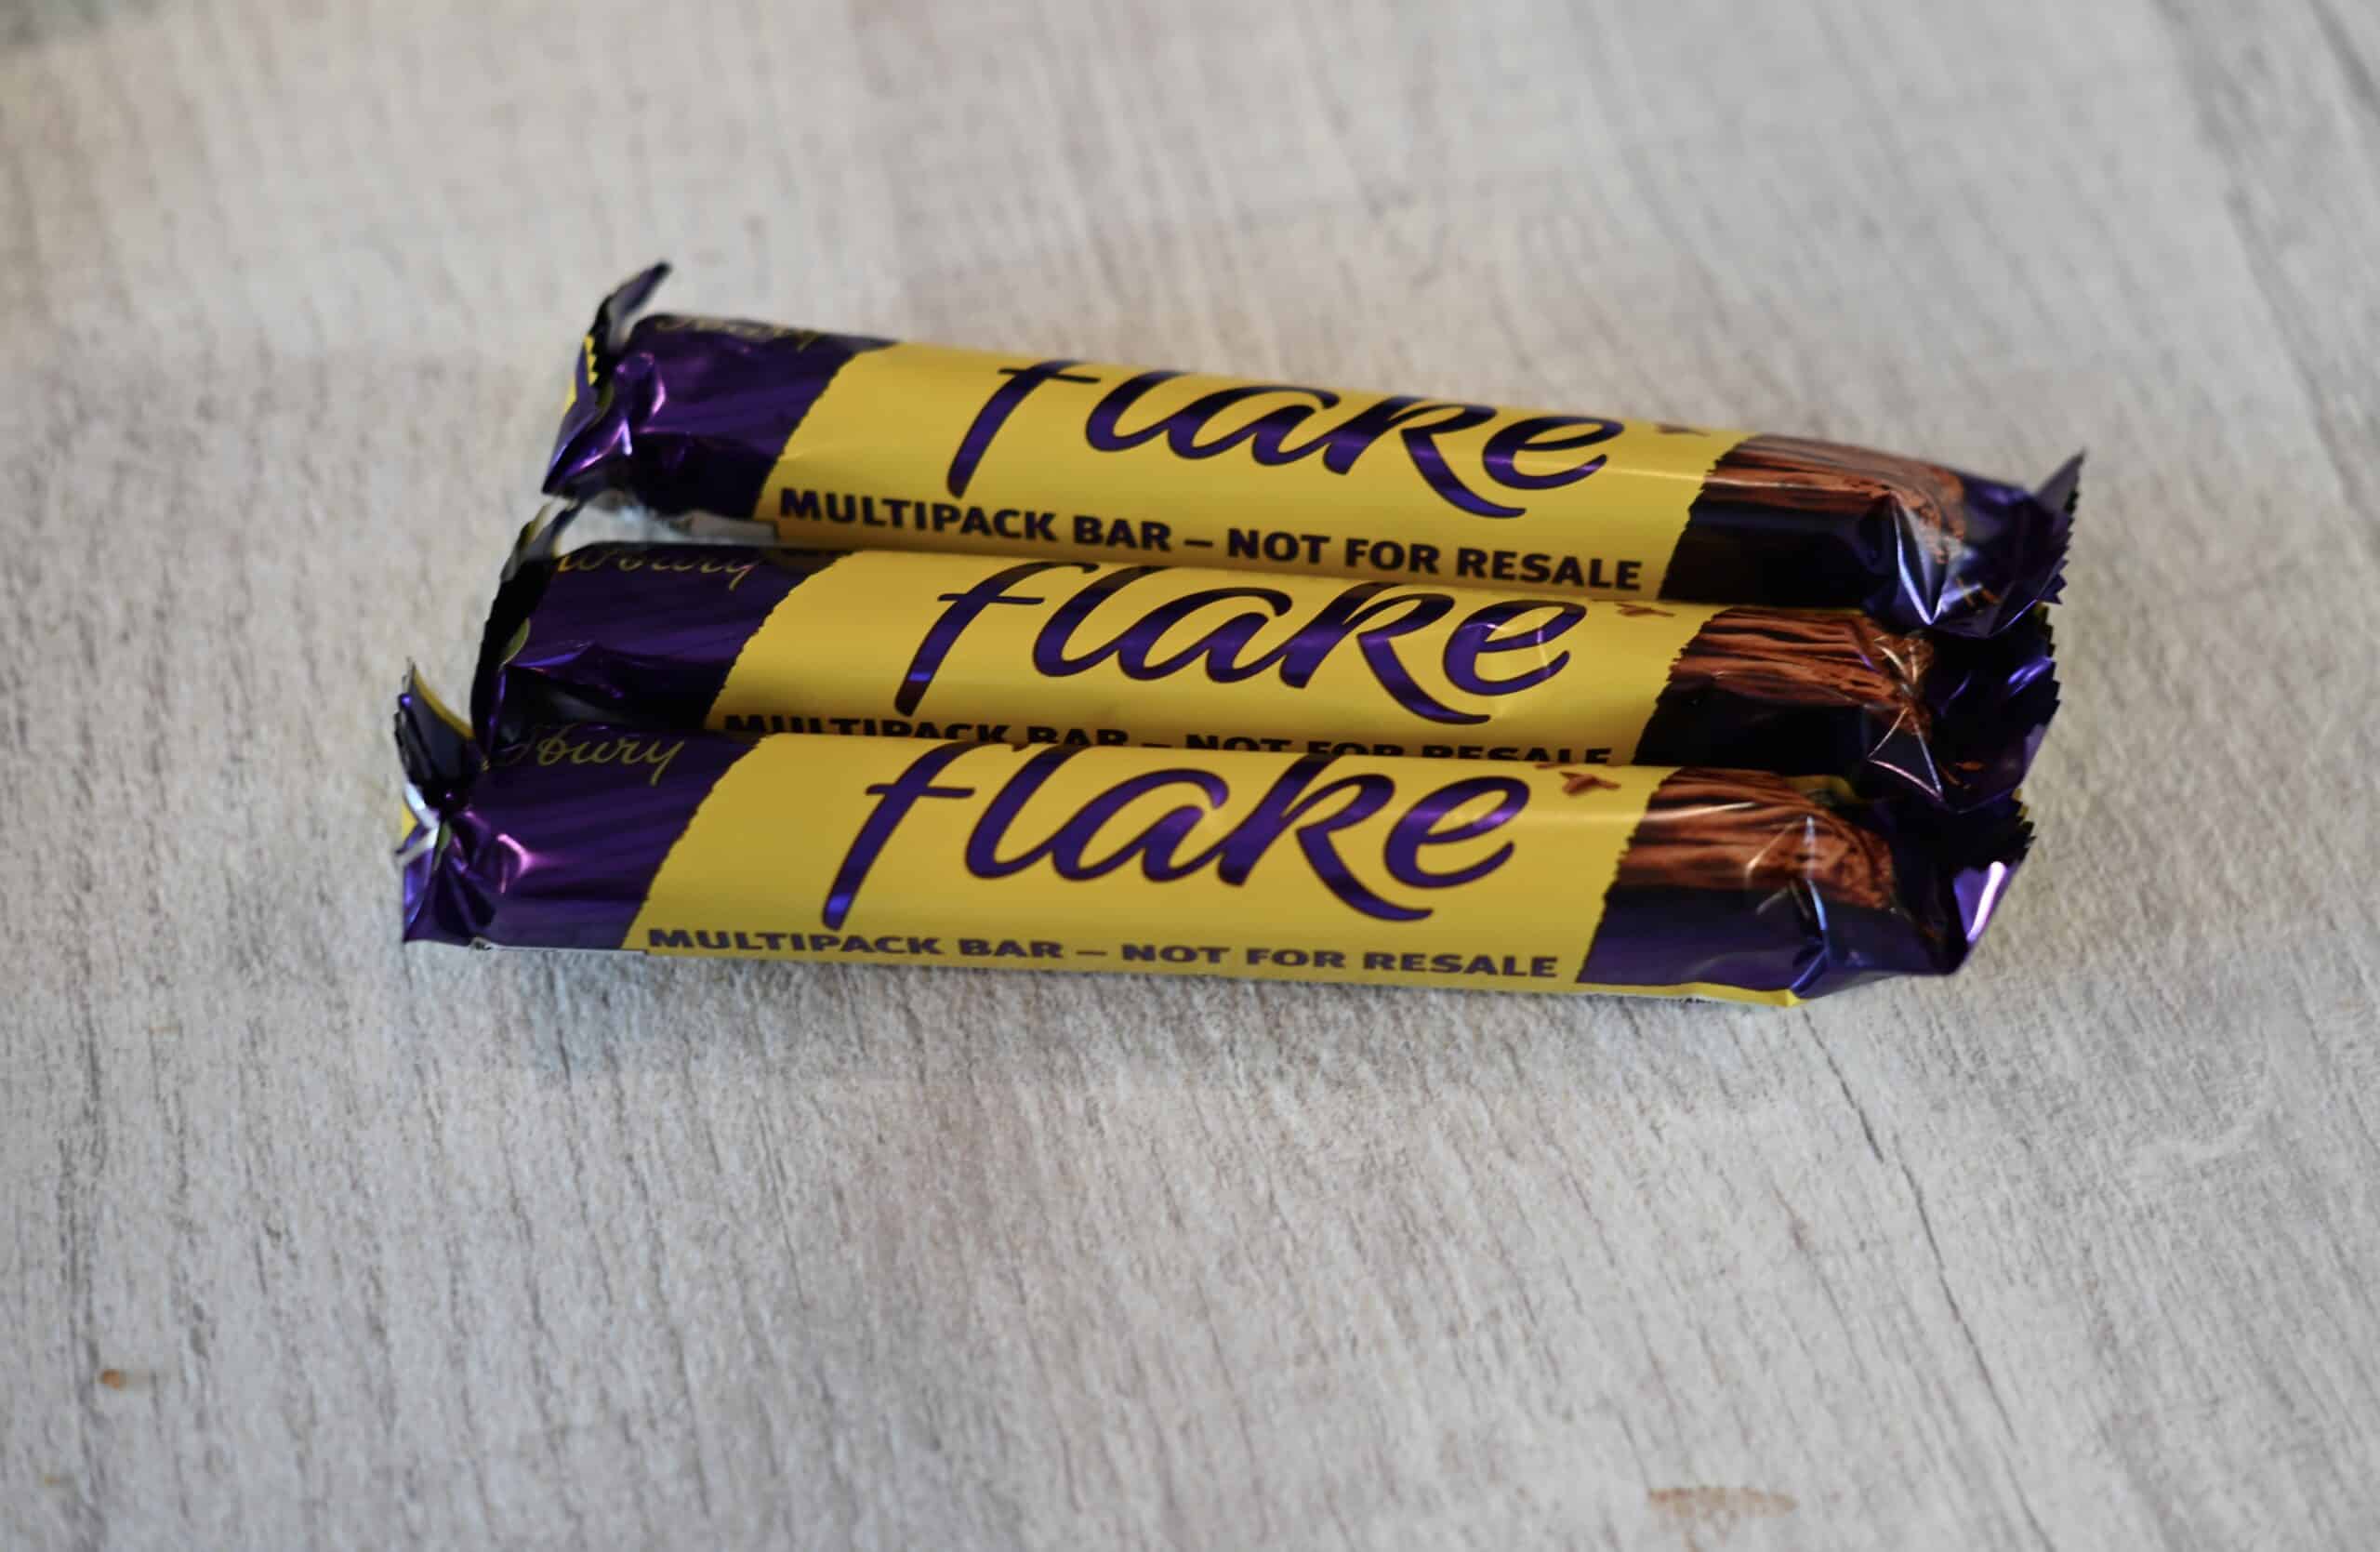 Can you melt a Cadbury's Flake?